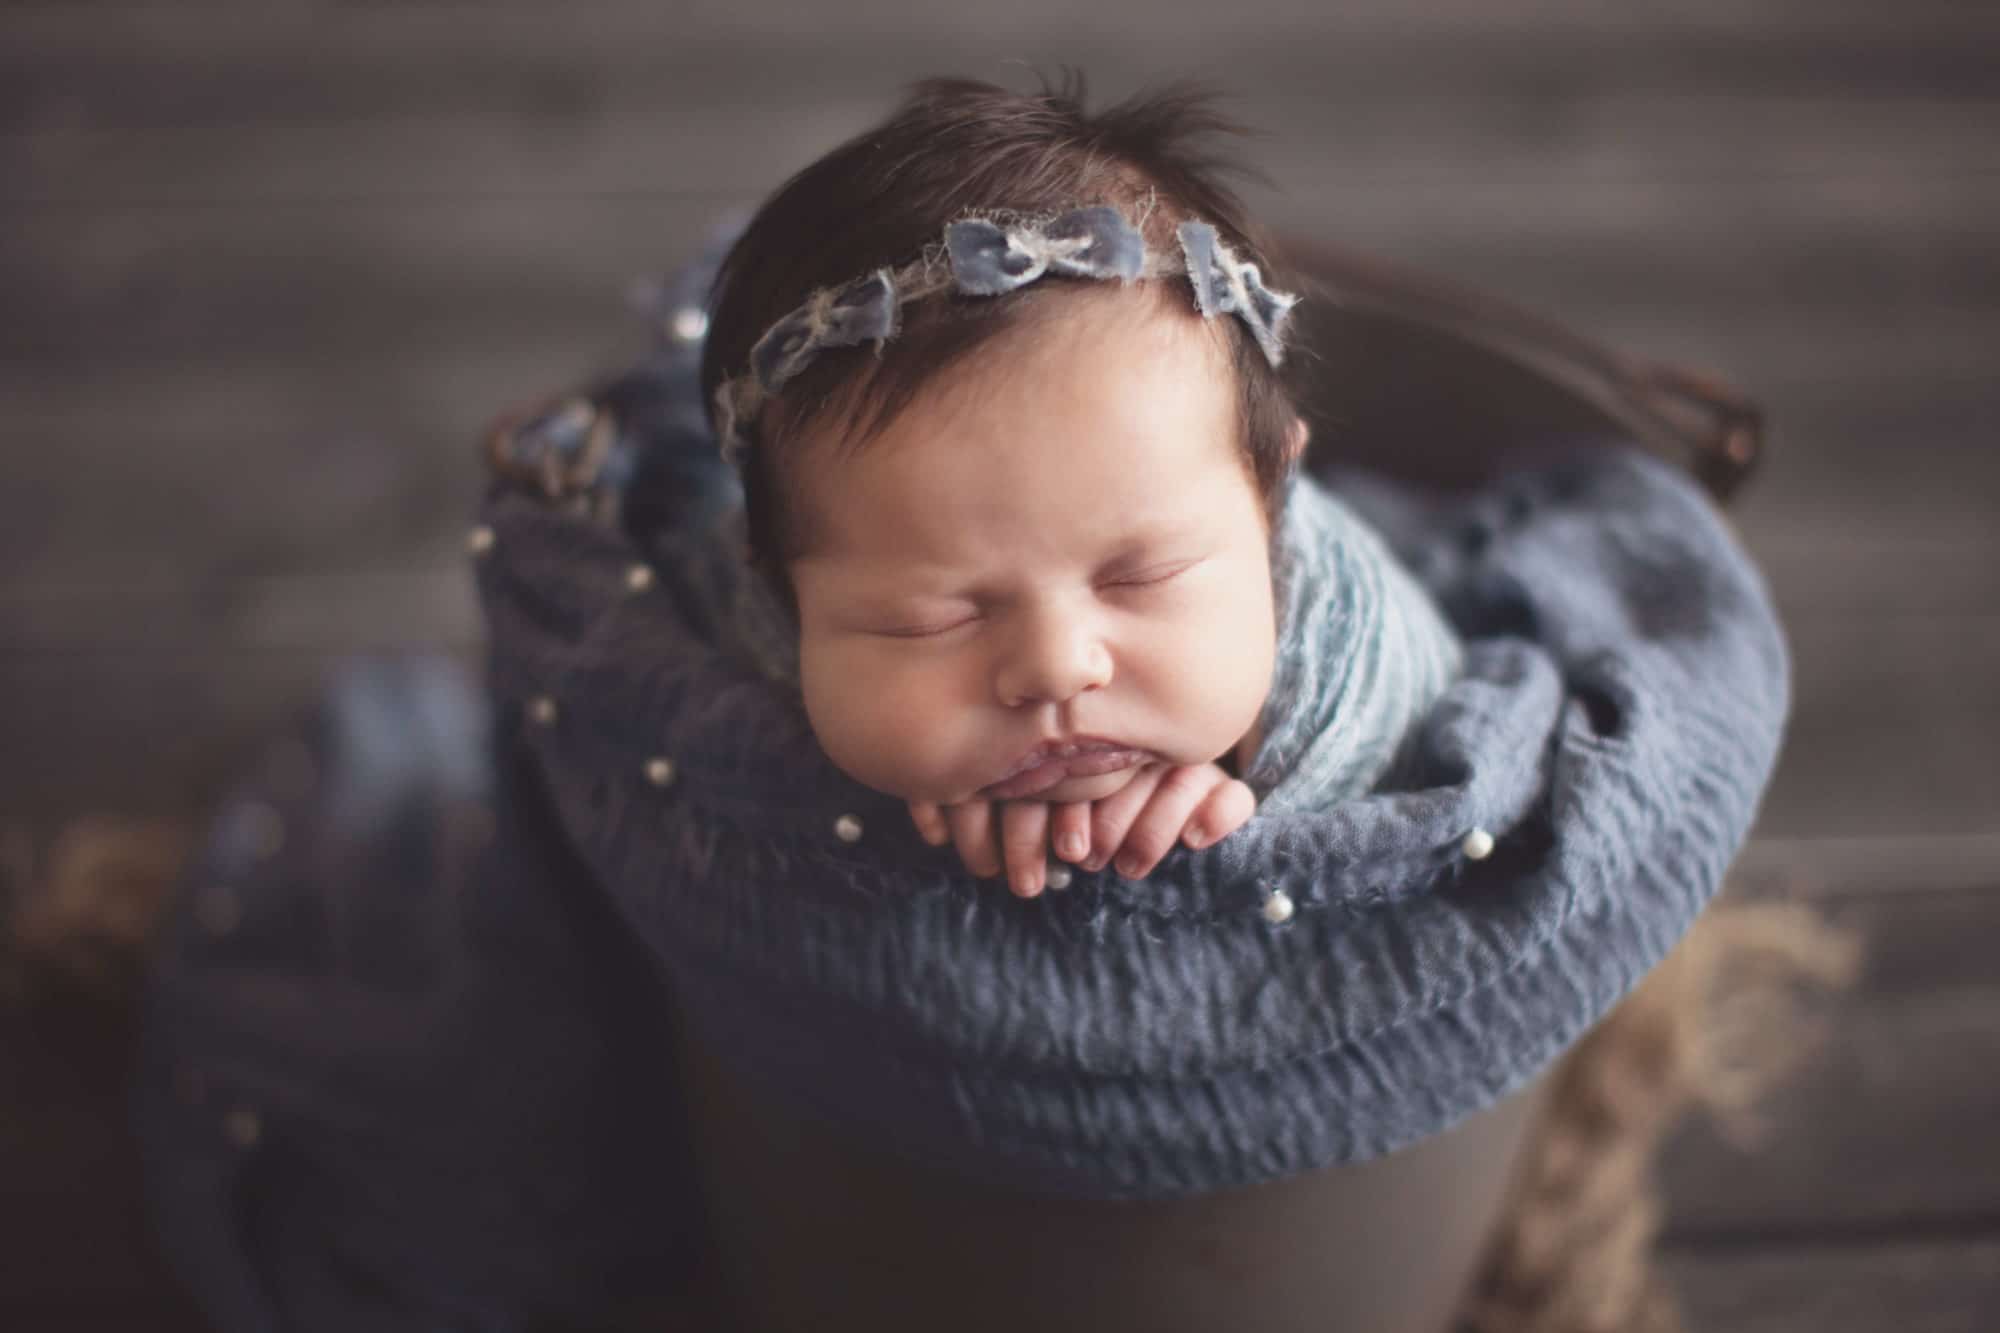 Newborn Portrait Studio Austin TX, newborn photography packages, professional newborn photos near me